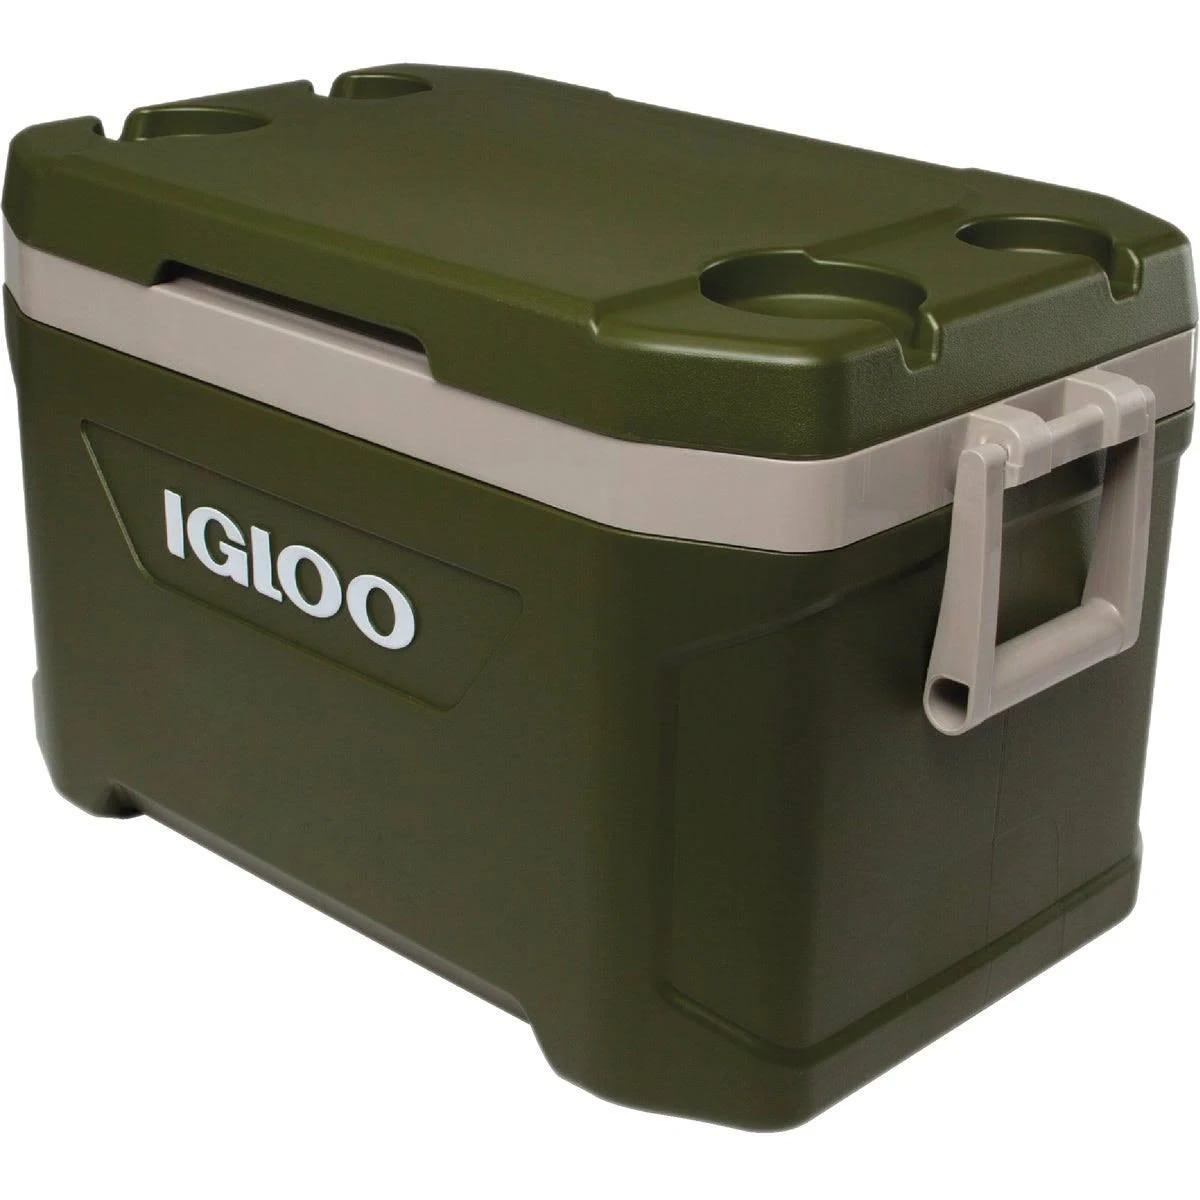 Igloo Latitude 52 Qt. Cooler - Tank Green/Sandstone | Image